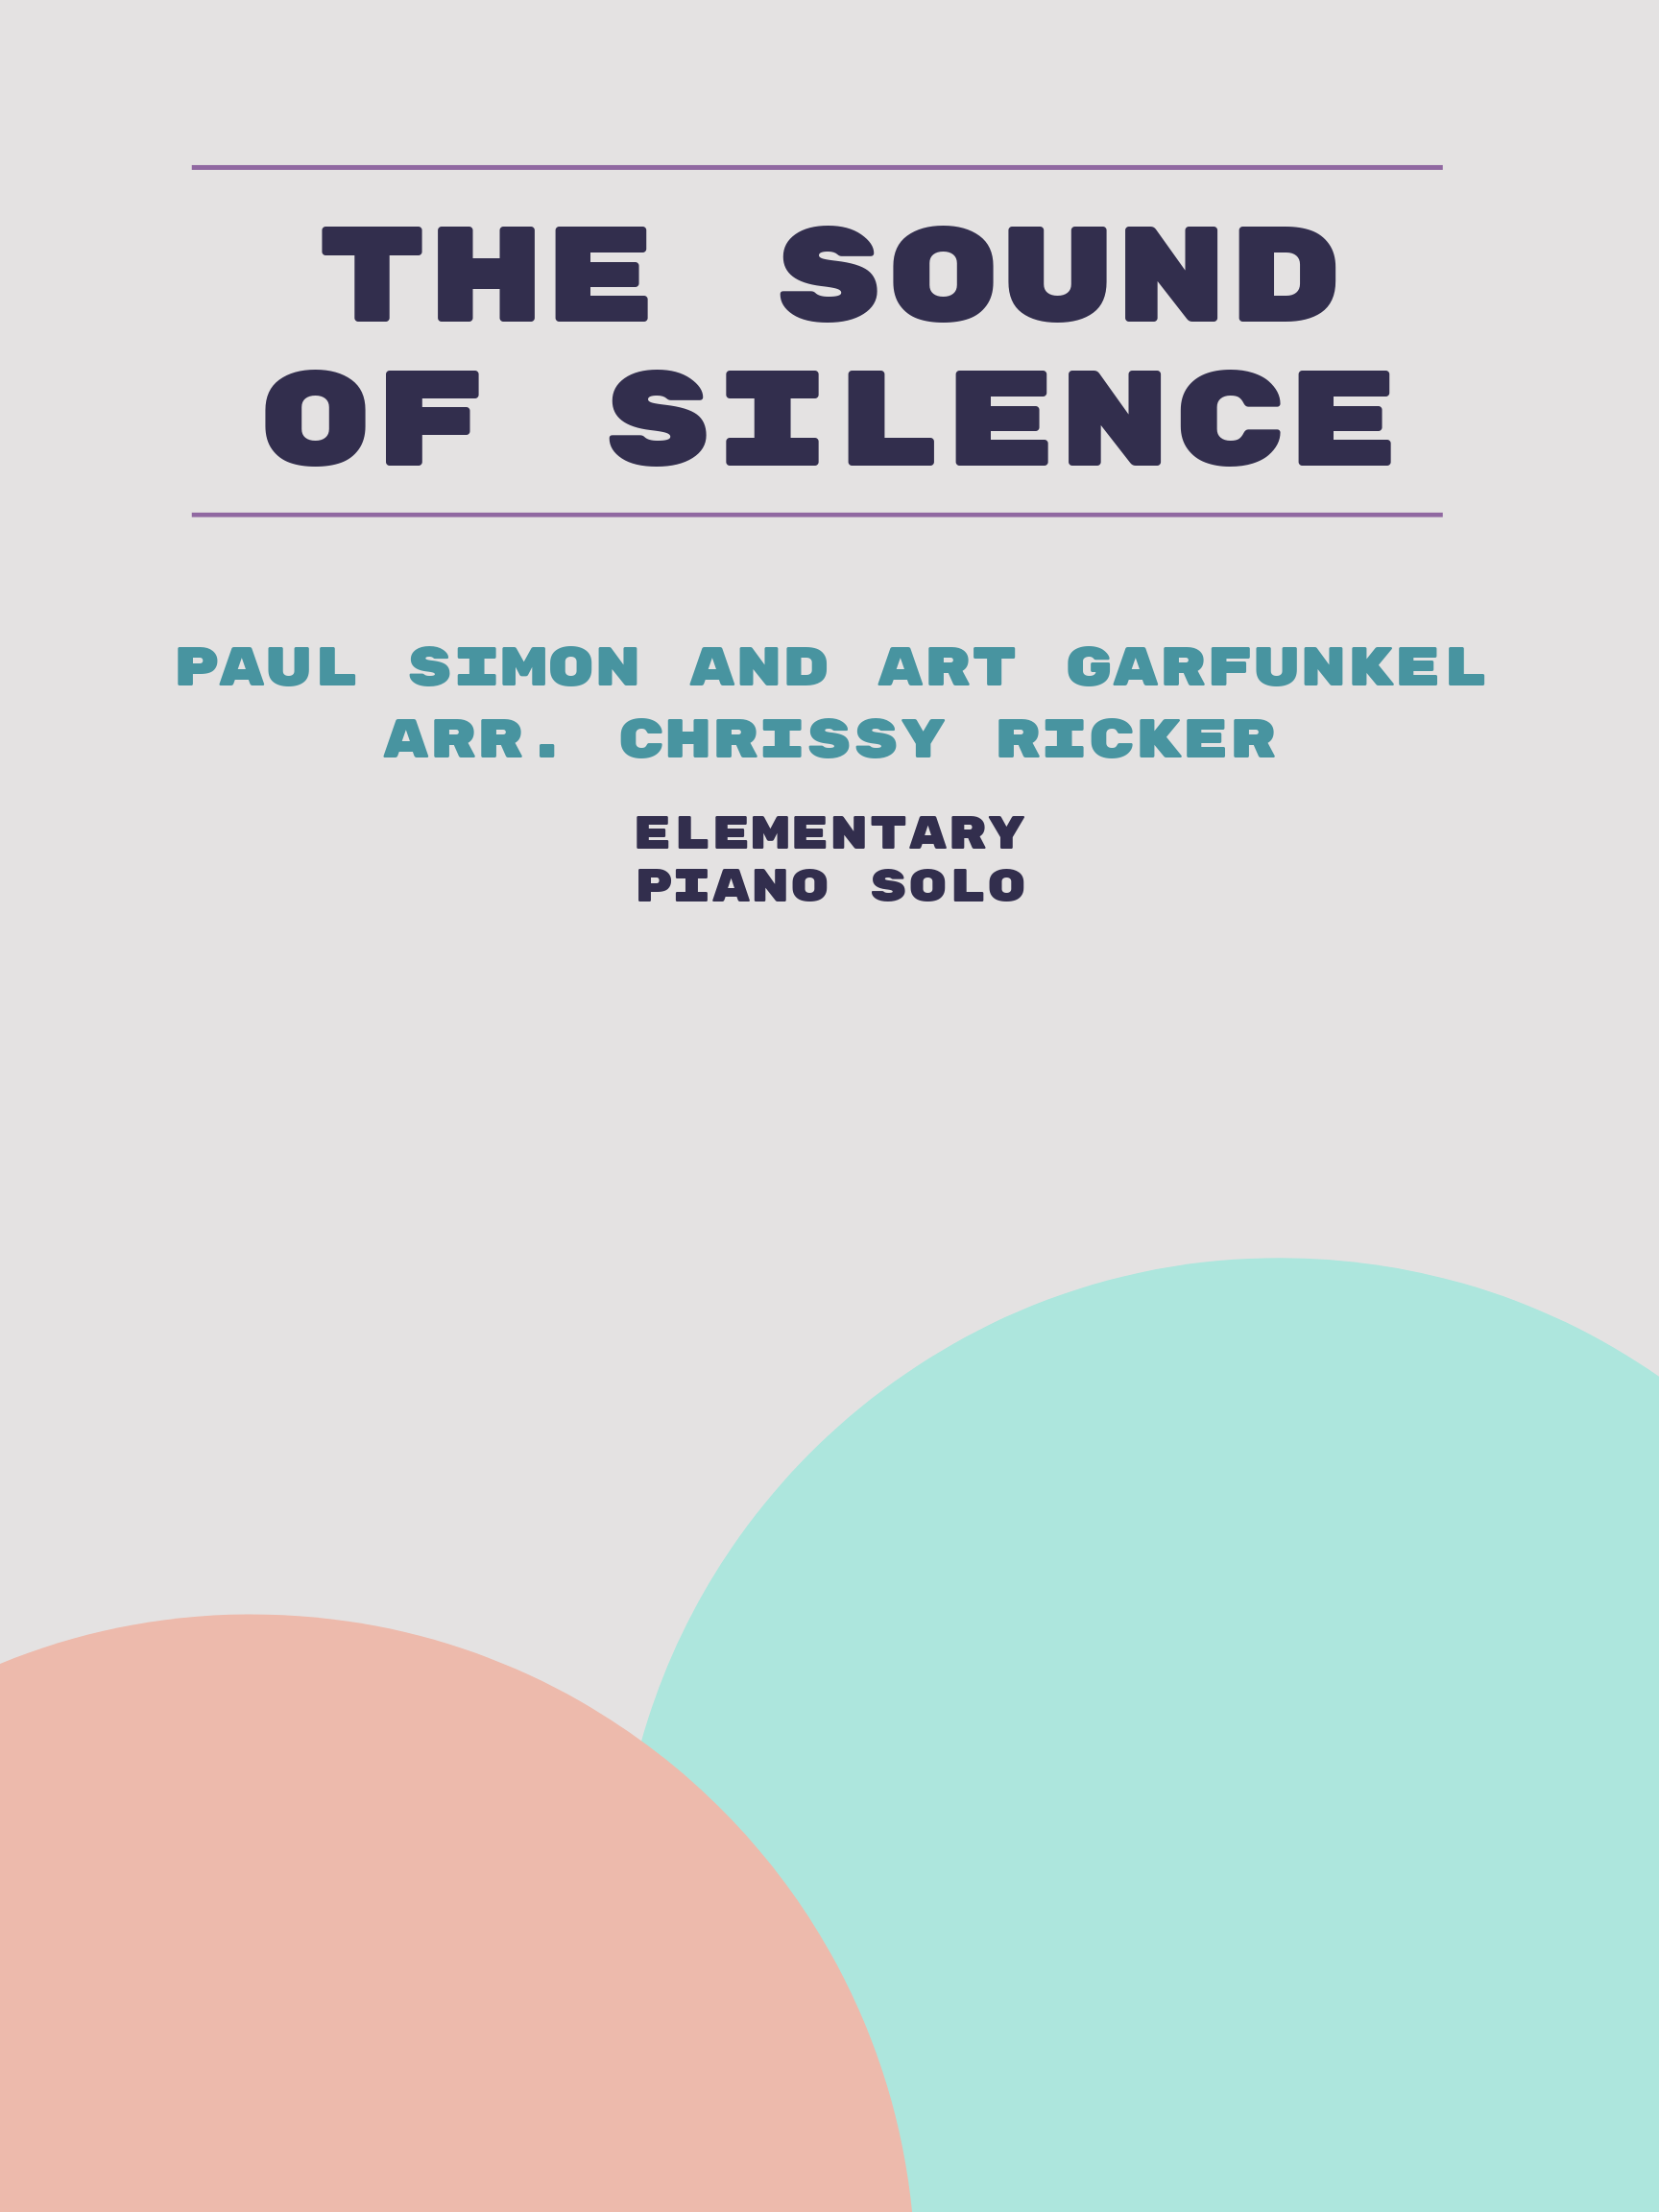 The Sound of Silence by Paul Simon and Art Garfunkel